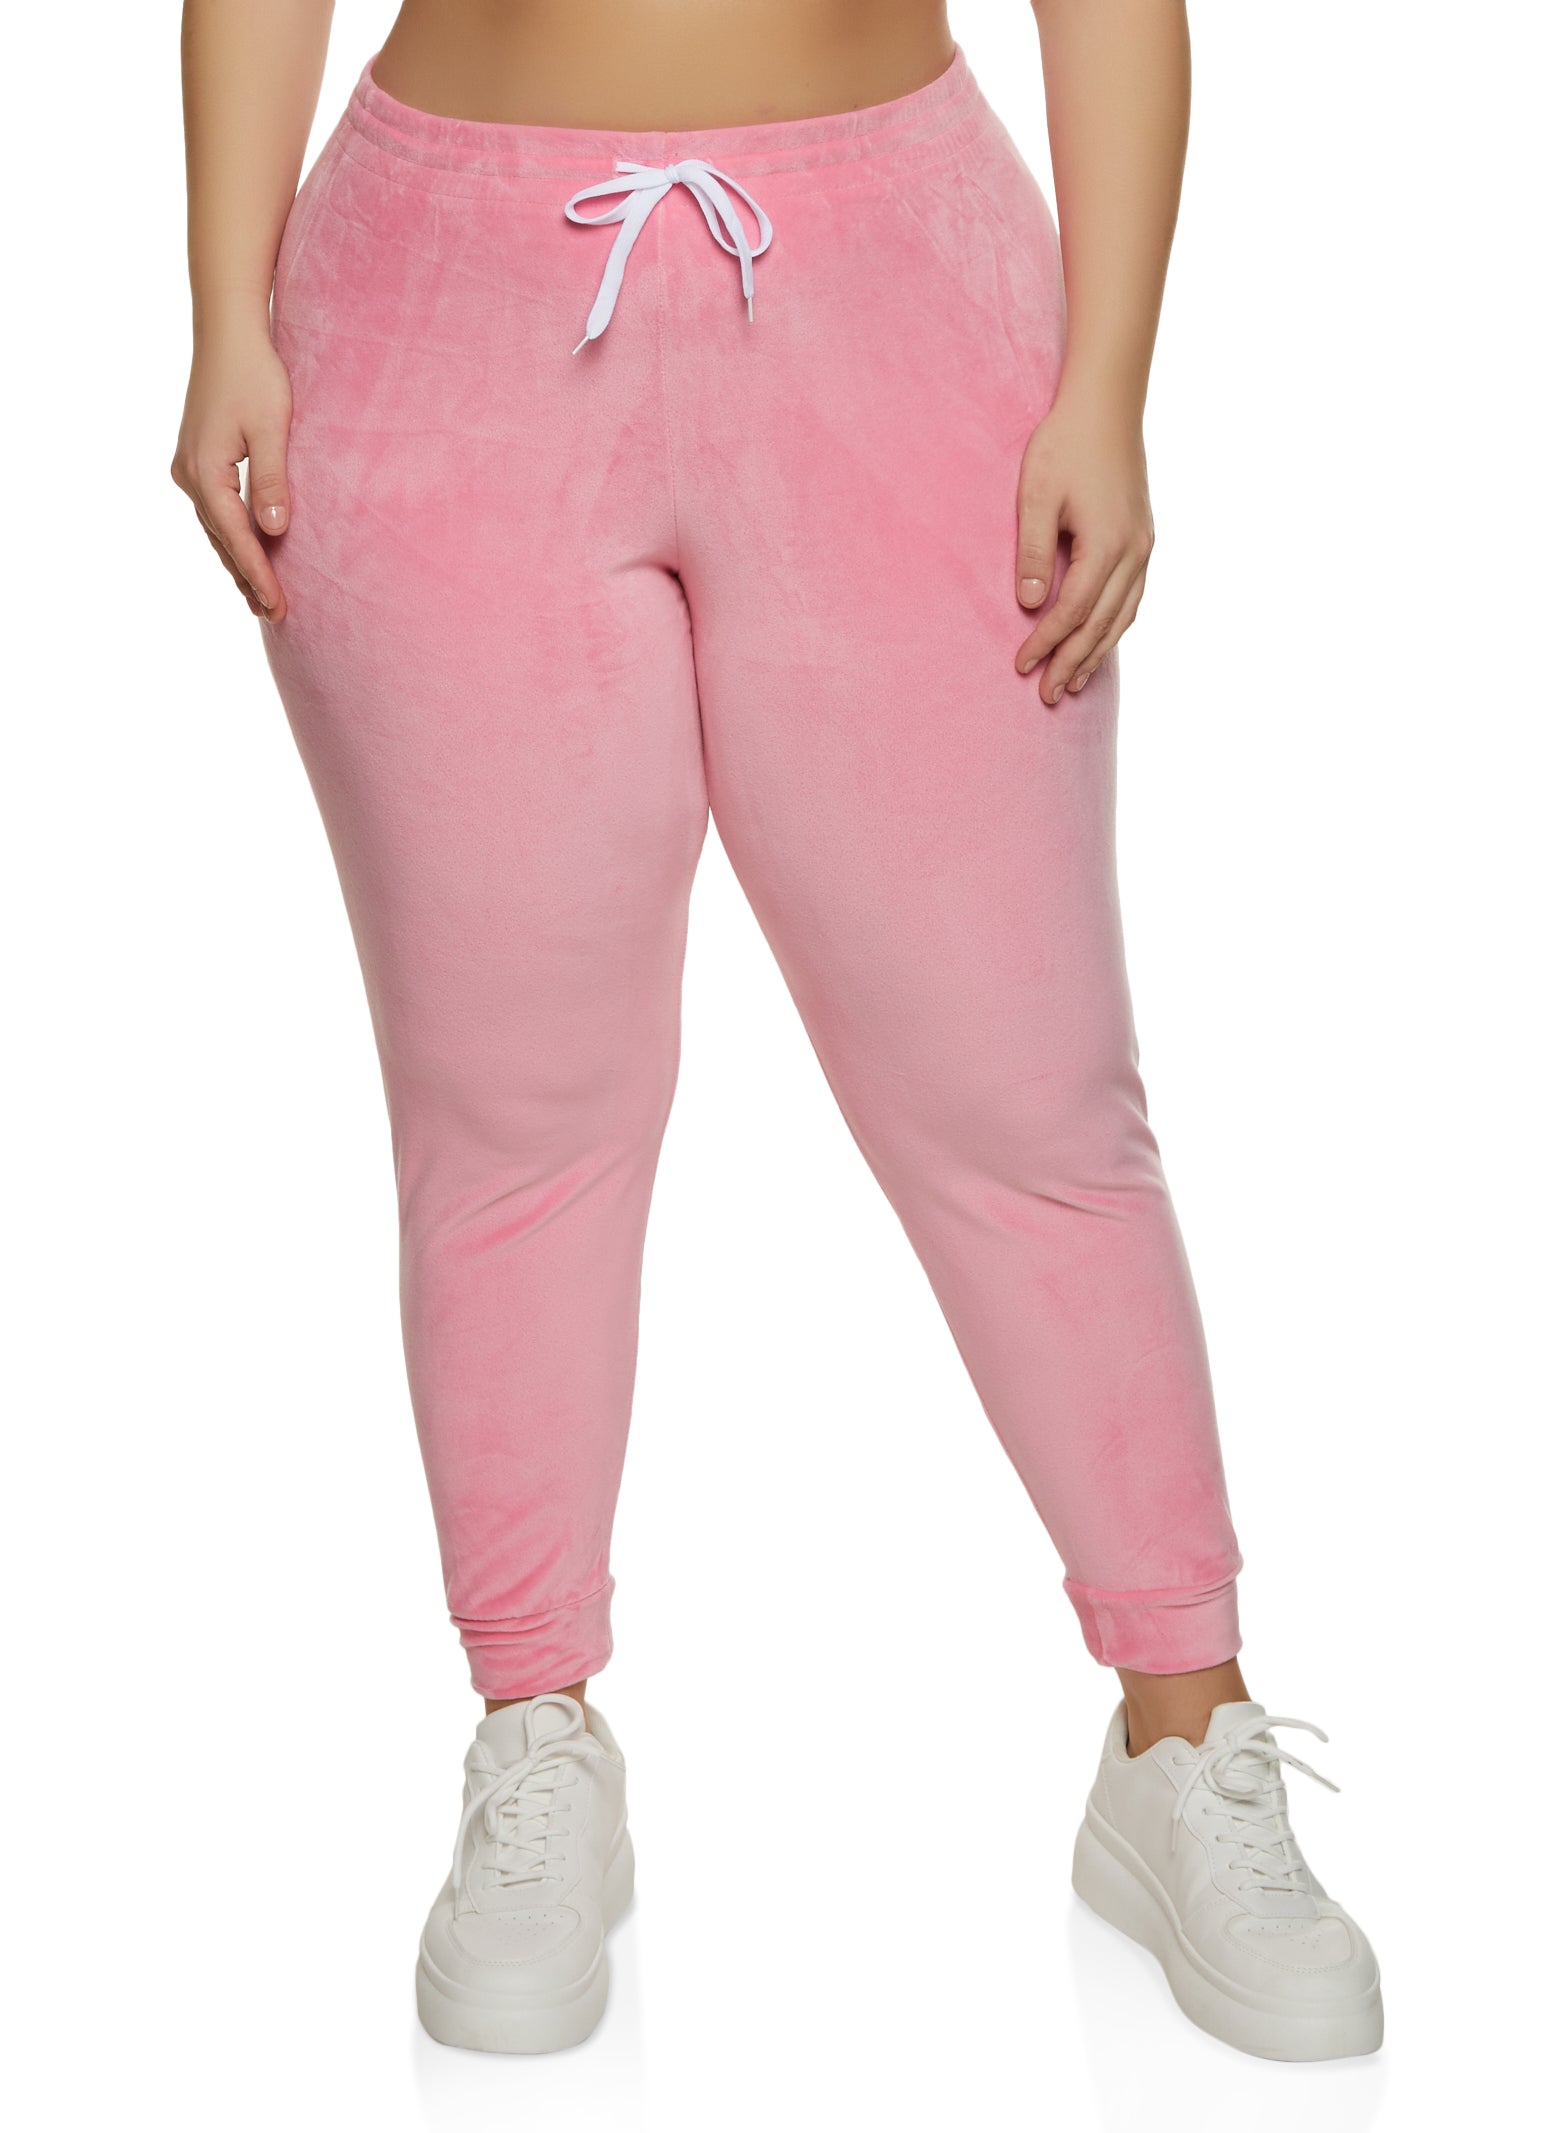 Rainbow Shops Womens Plus Size Sweatpants, Pink, Size 3X